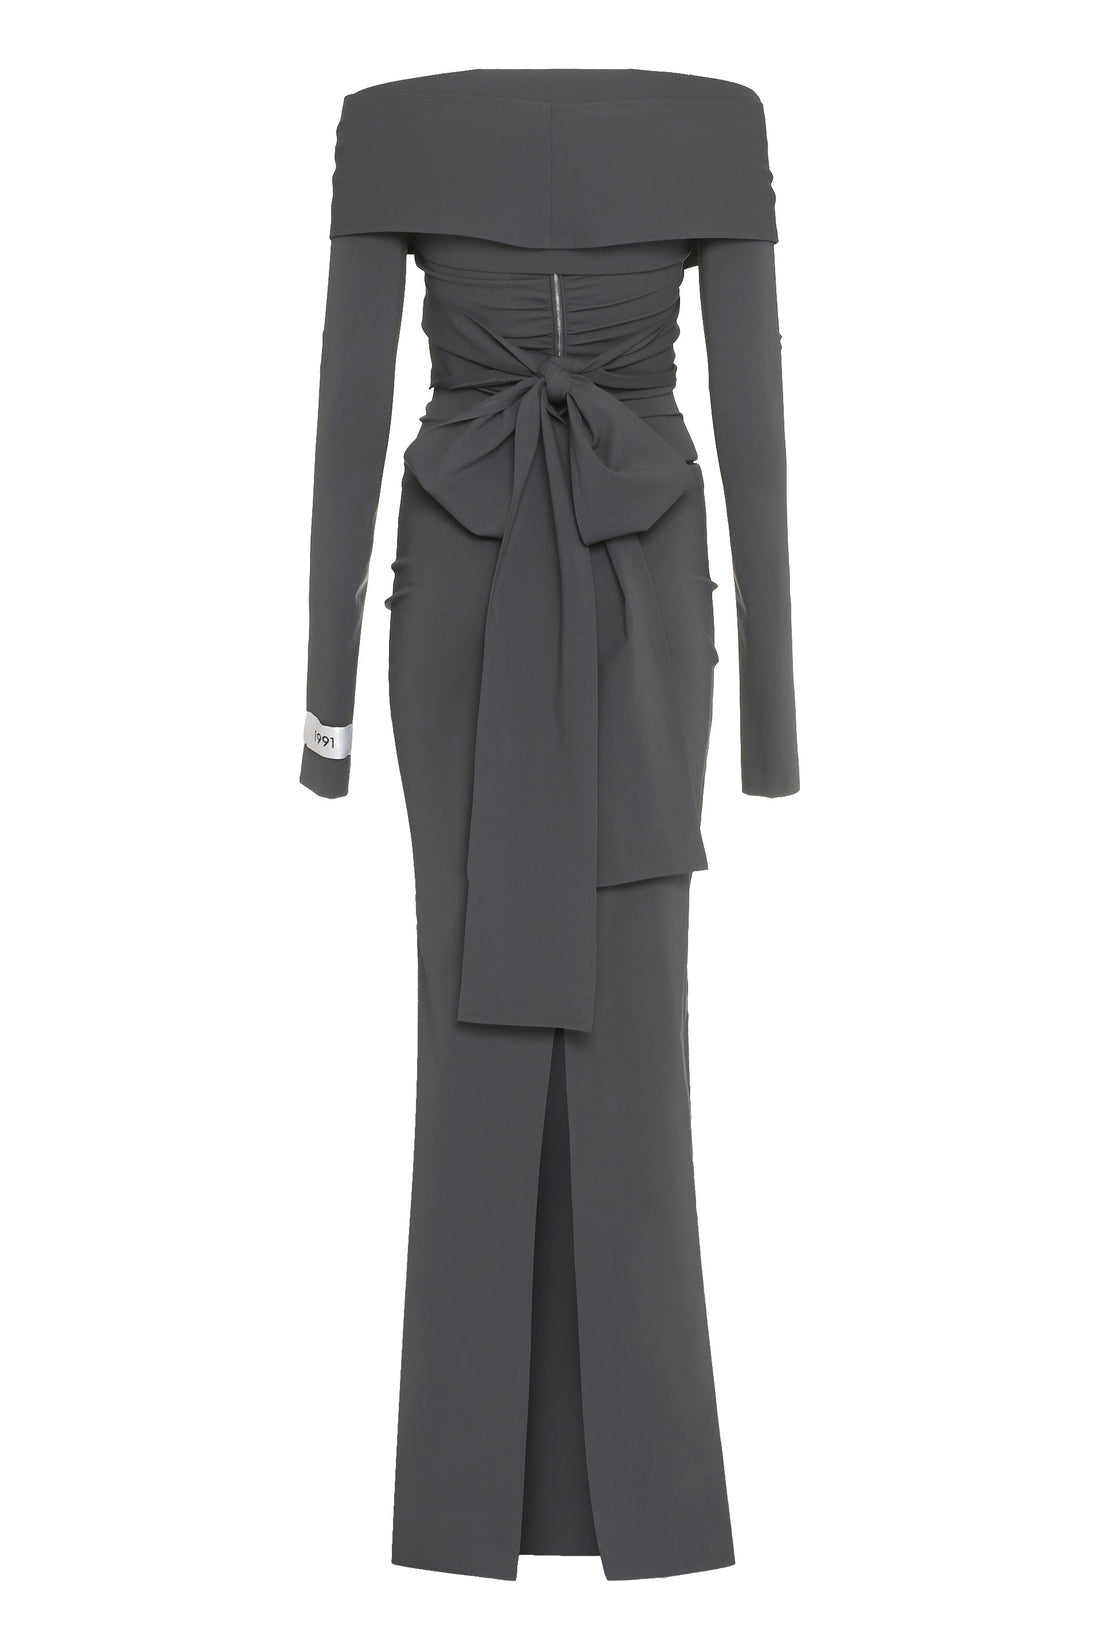 Dolce & Gabbana-OUTLET-SALE-KIM DOLCE&GABBANA - Jersey dress-ARCHIVIST